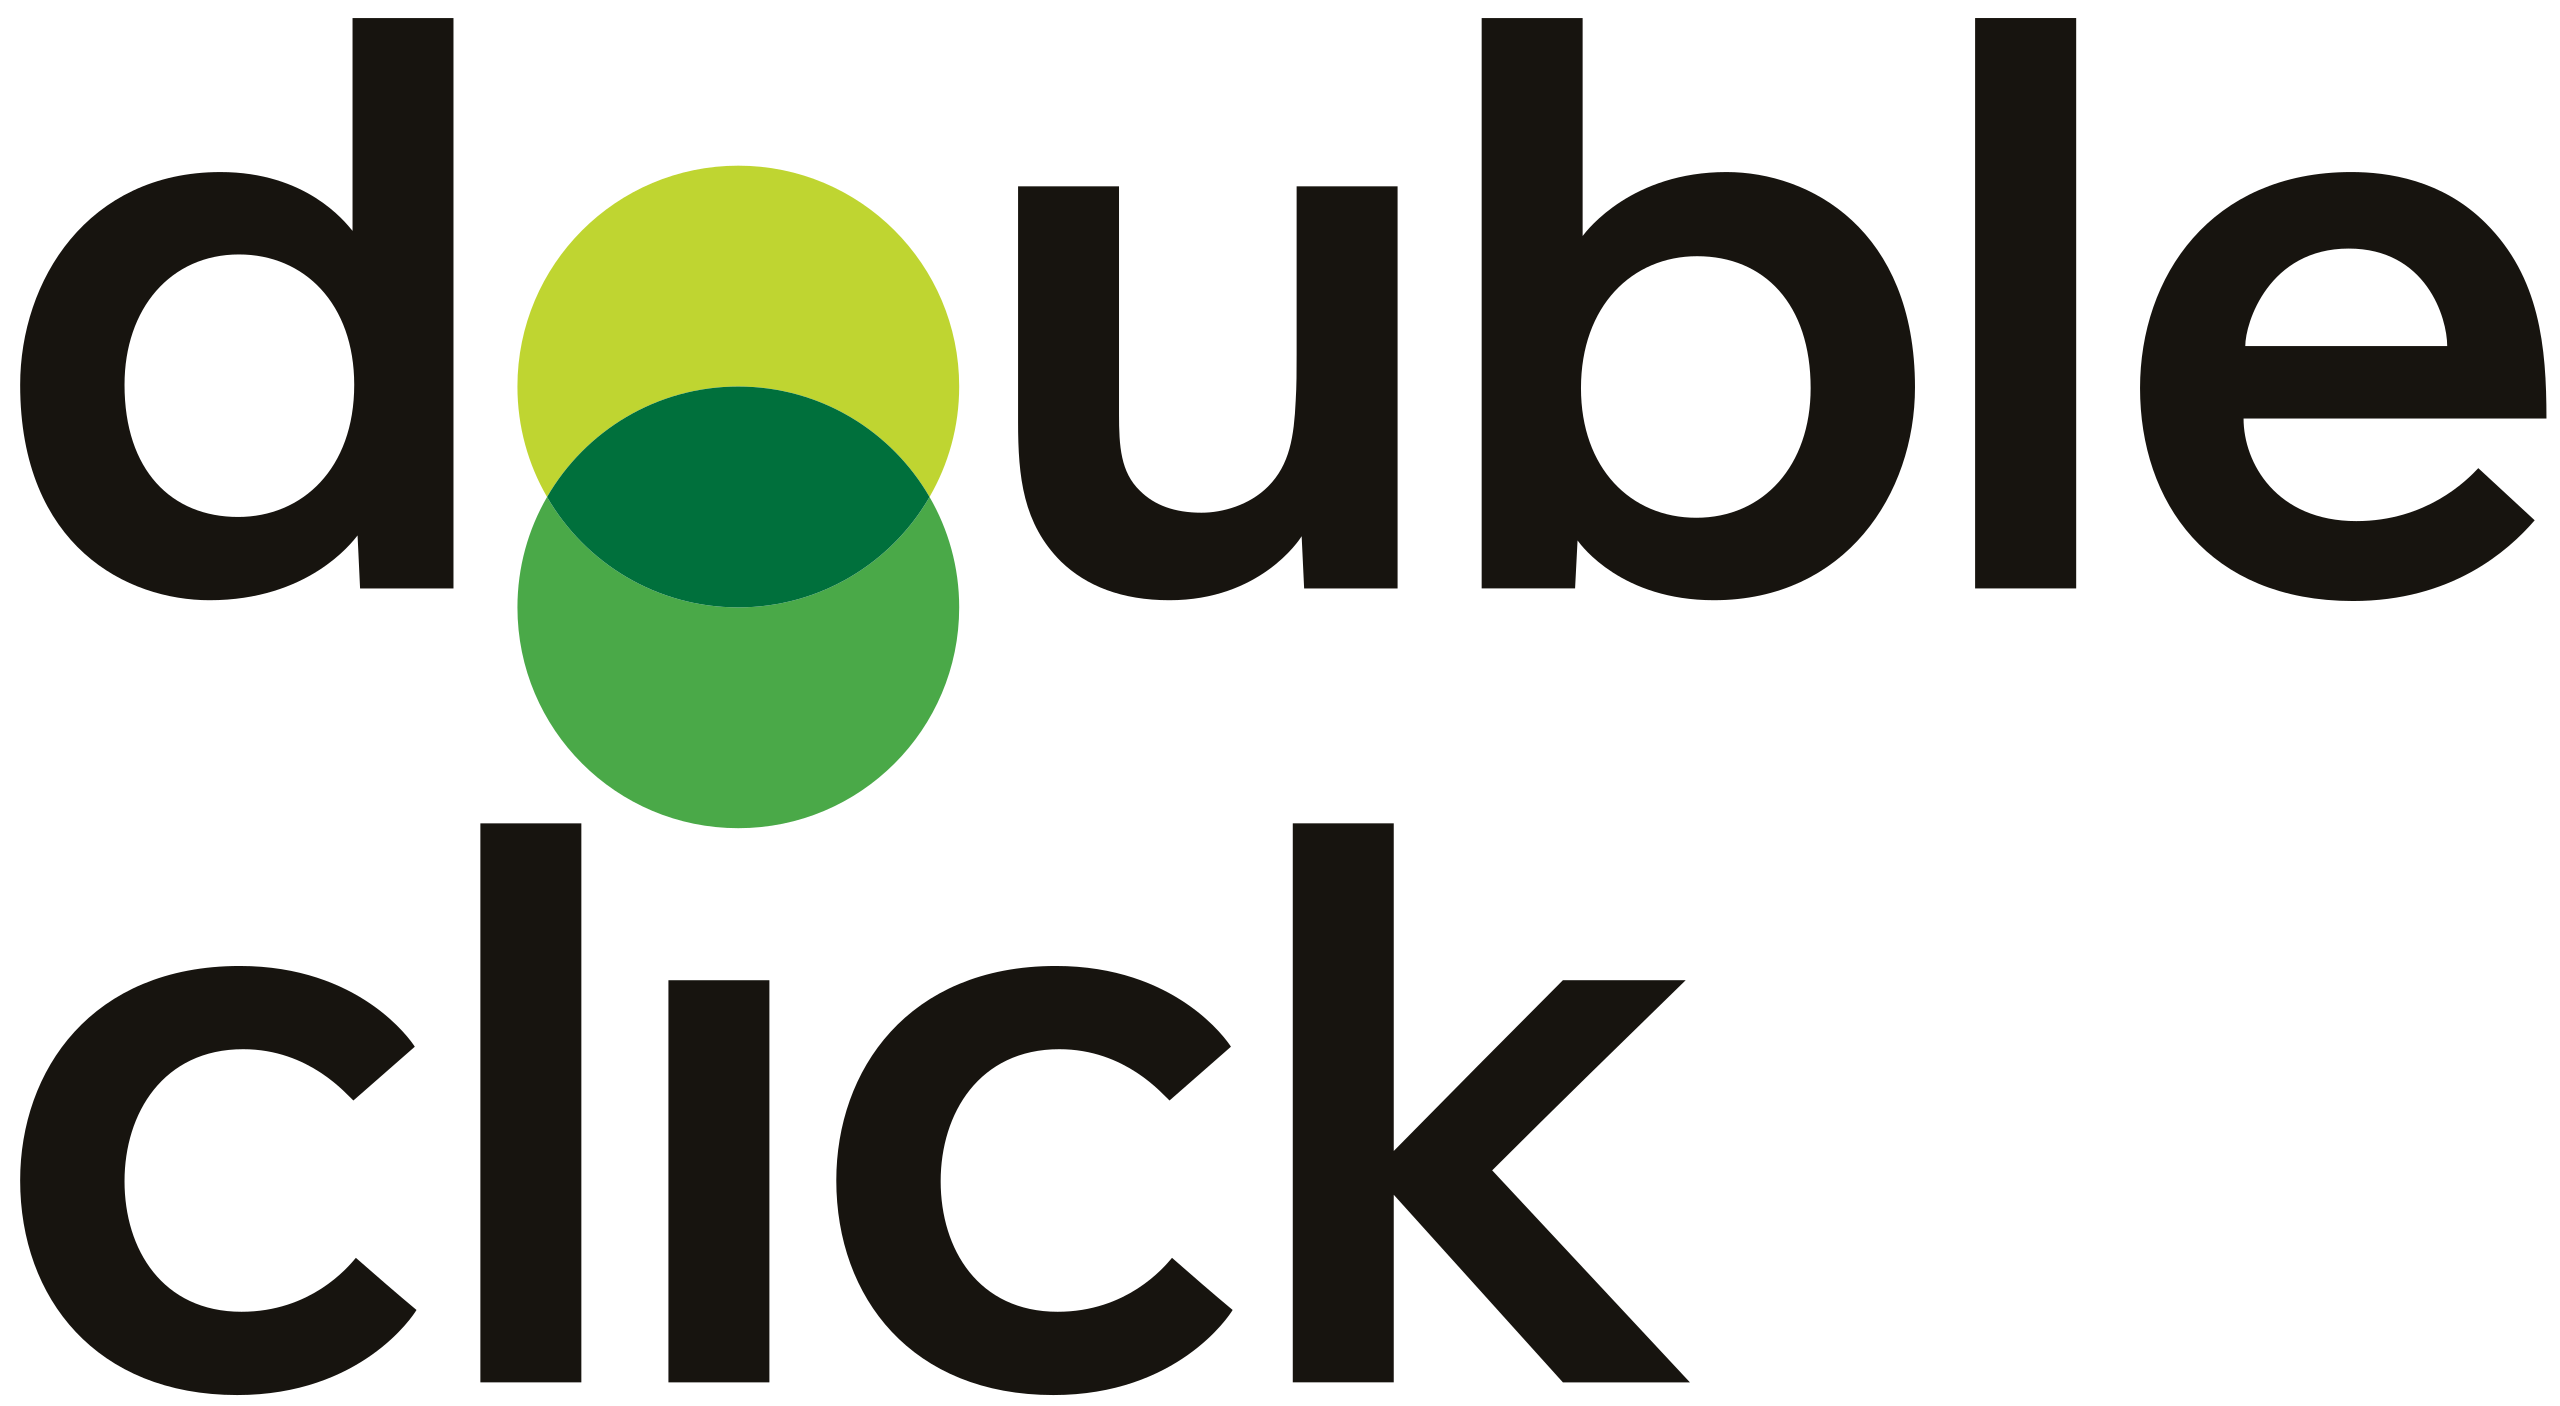 doubleclick.net